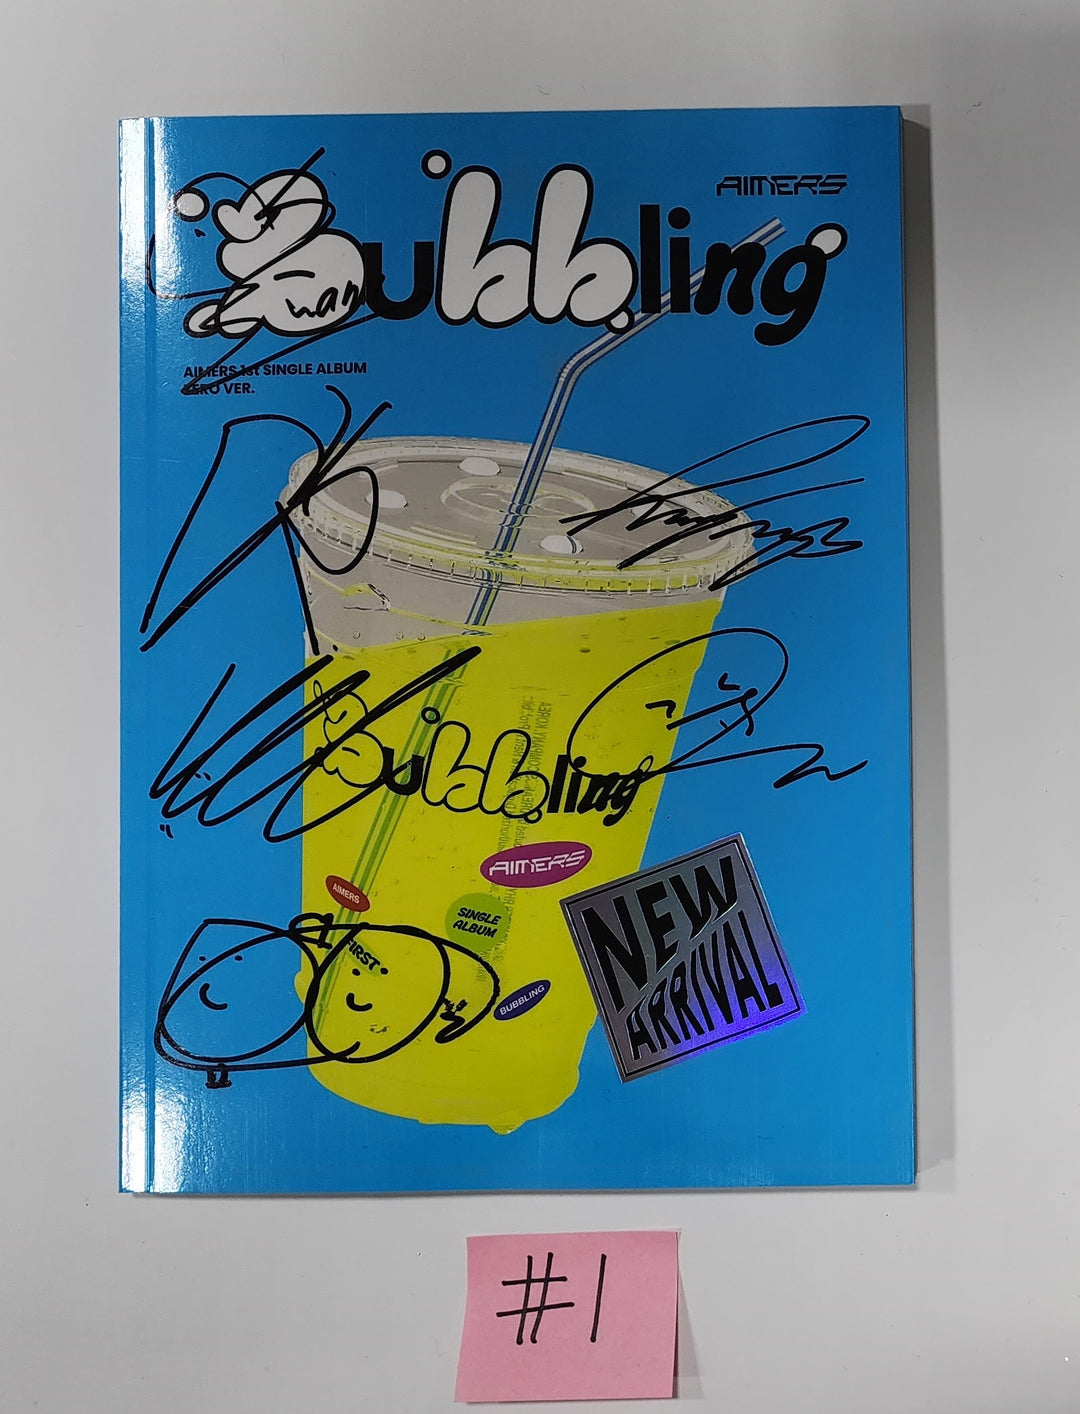 AIMERS "Bubbling" - Hand Autographed(Signed) Promo Album